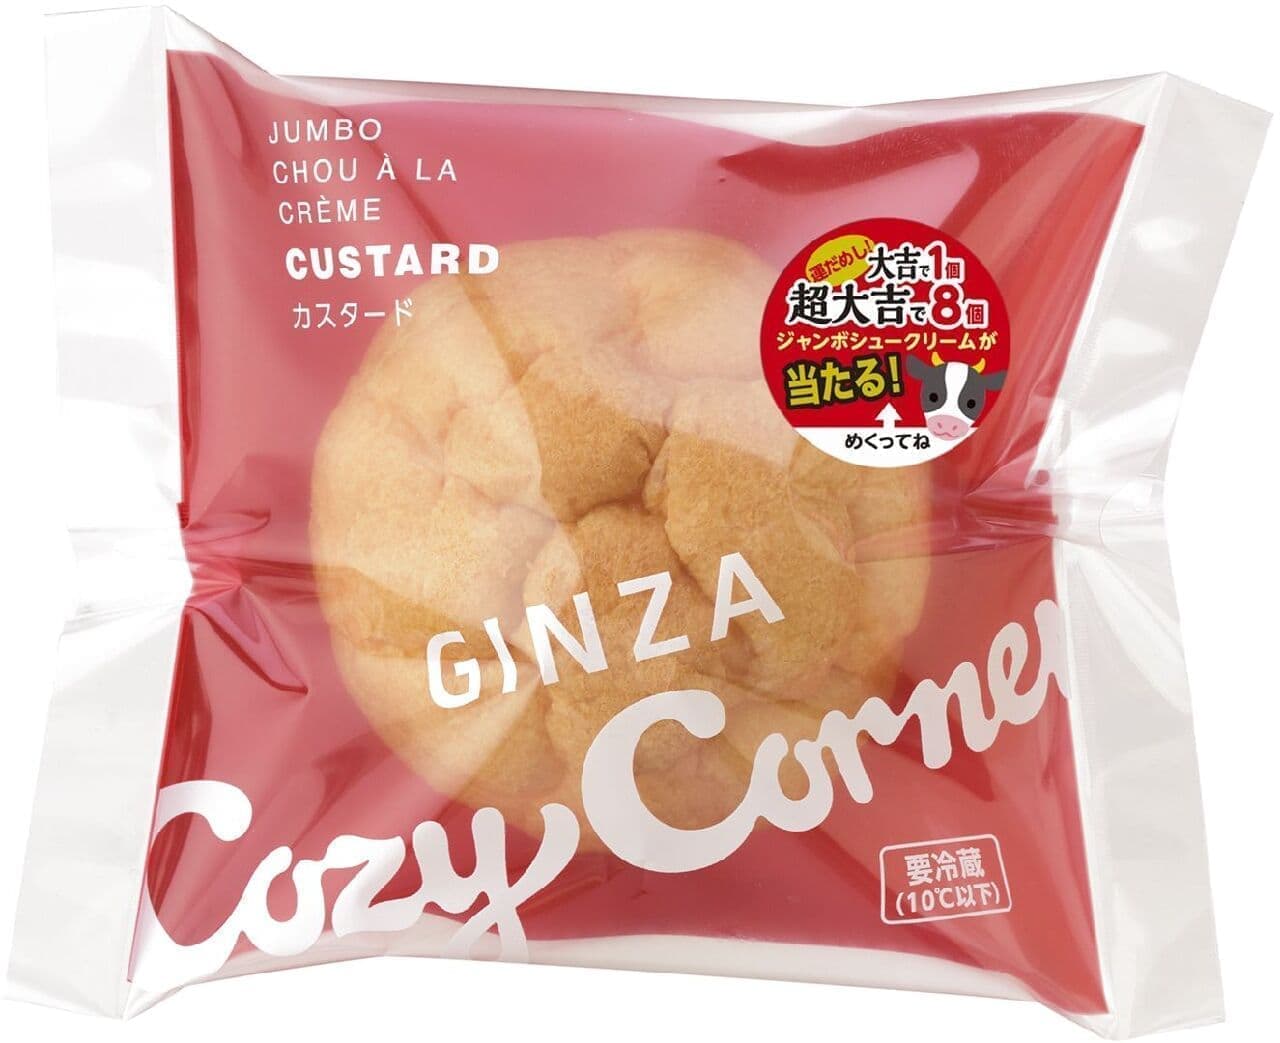 Ginza Cozy Corner "Jumbo Cream Puff (Custard)"